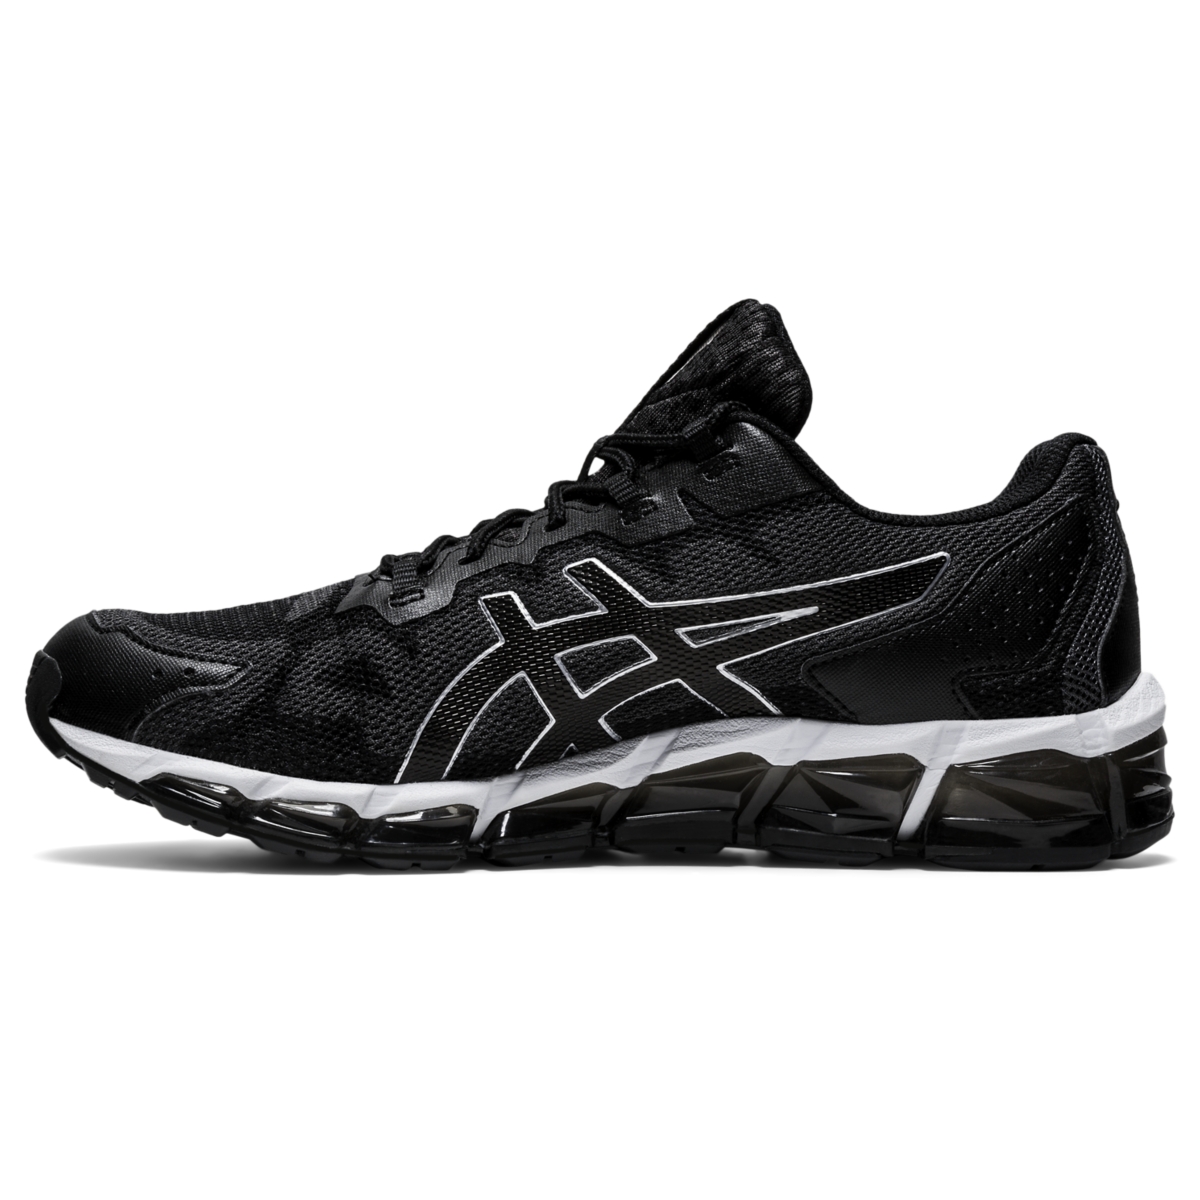 ASICS Men's GEL-QUANTUM 360 6 Running Shoes 1021A337 | eBay